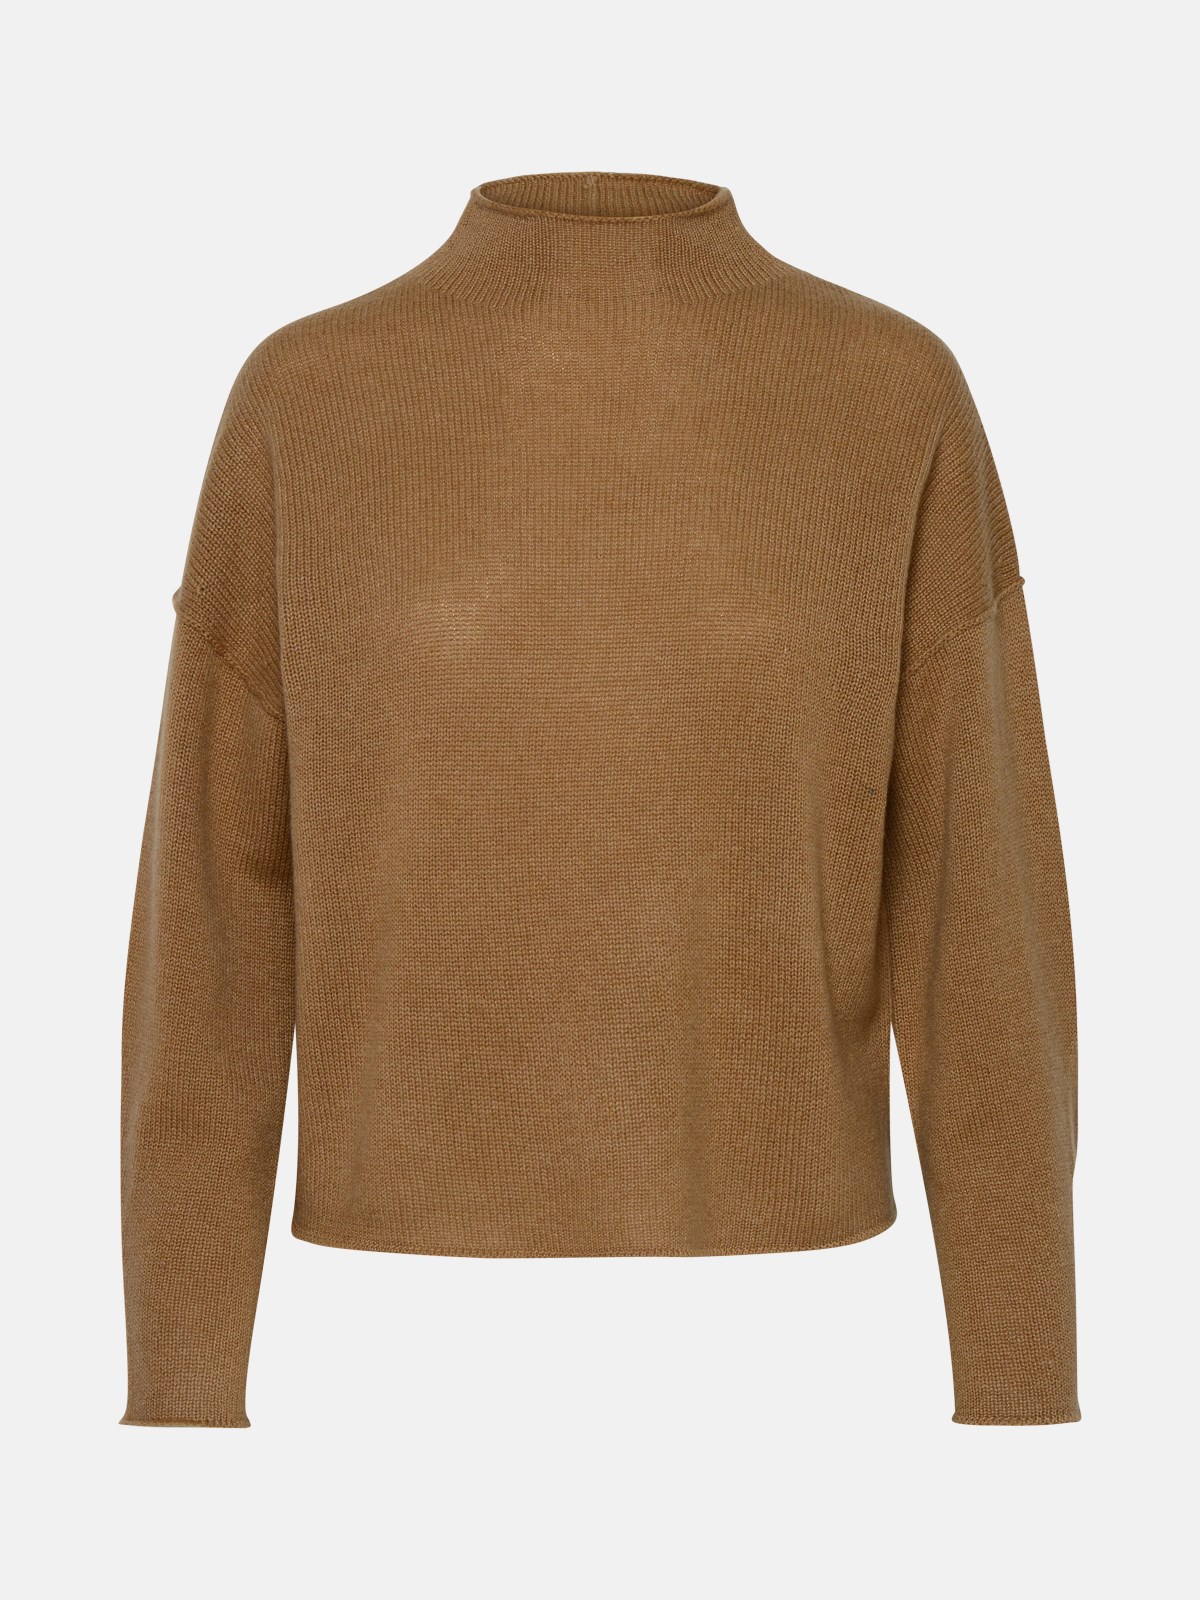 360cashmere Kamala Beige Cashmere Turtleneck Sweater In Brown